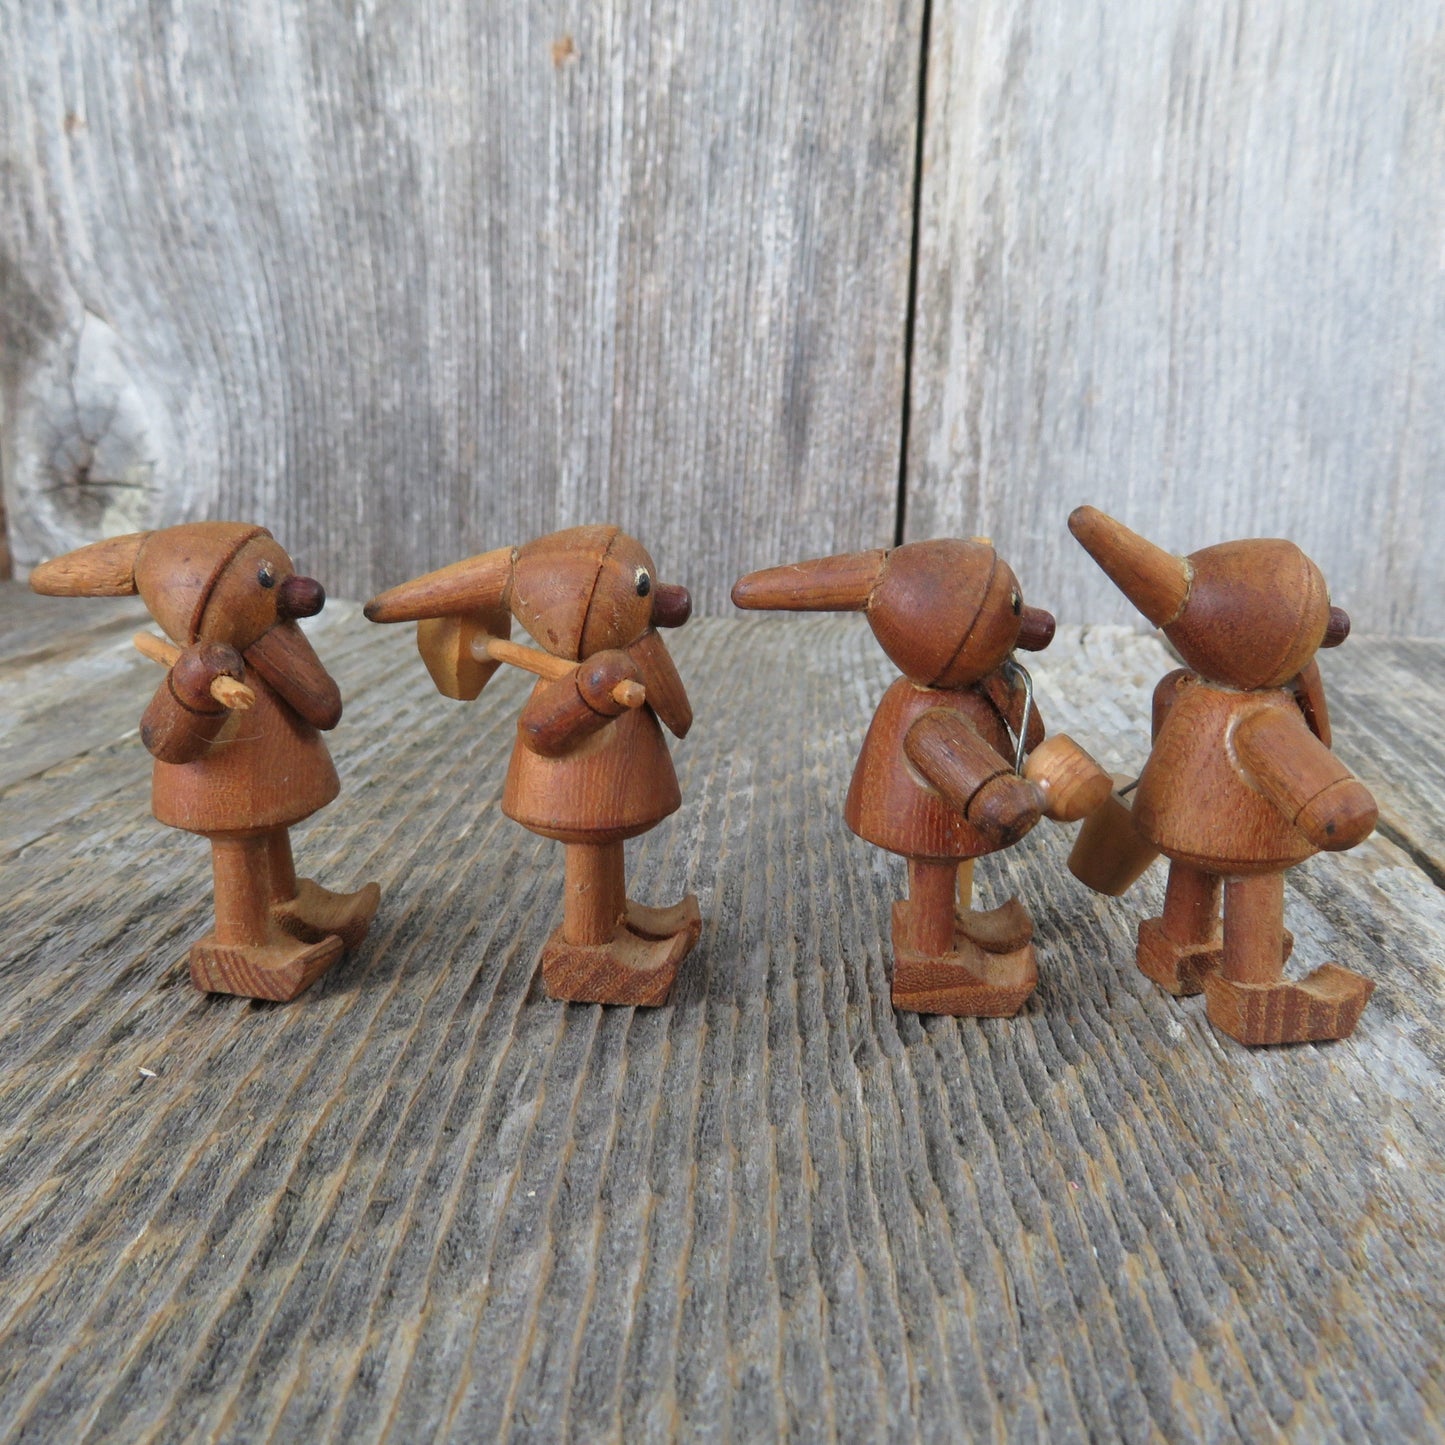 Vintage Wooden Gnome Elf Figurine Set of 4 Pipe Pail Ax Walking Stick Natural Wood Color Fairy Village Figures Miniature